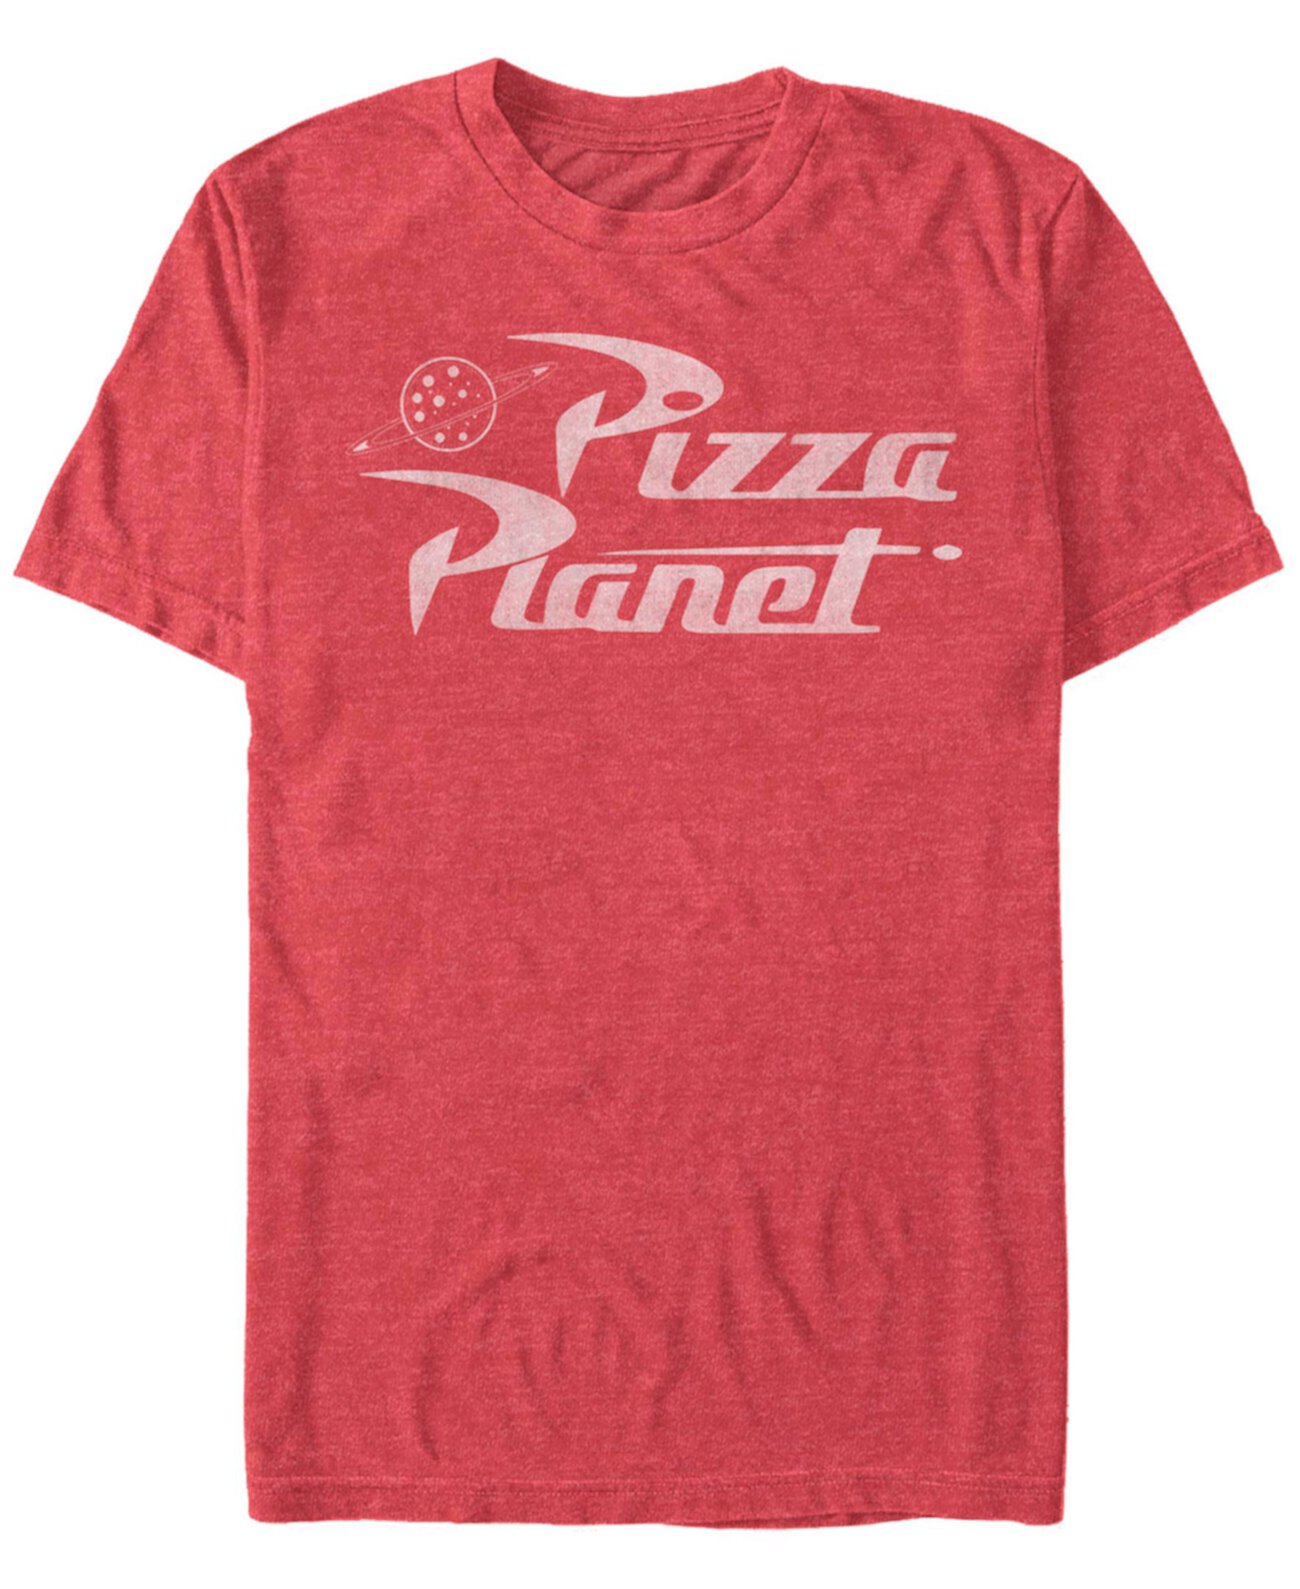 Мужская футболка Disney Pixar Toy Story Pizza Planet с коротким рукавом FIFTH SUN